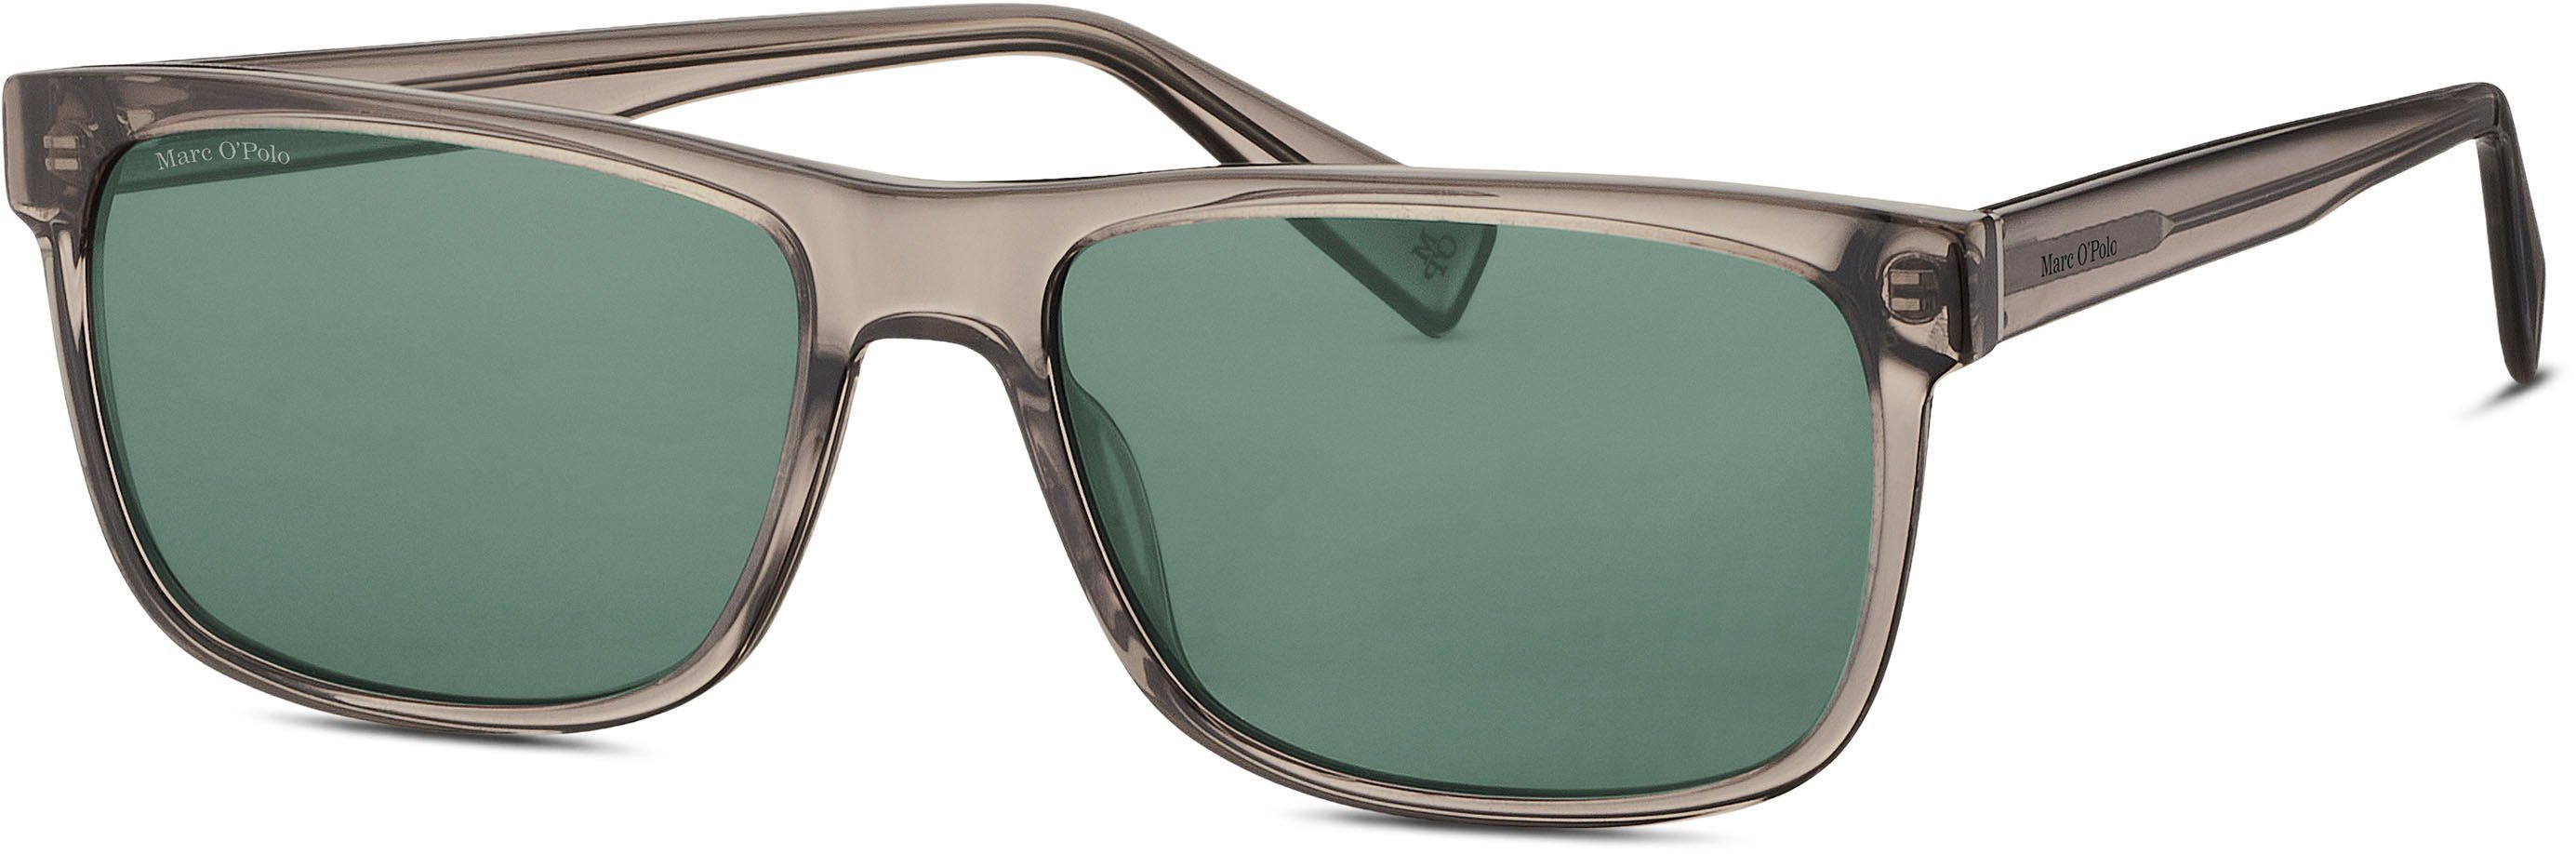 Marc O'Polo Sonnenbrille Modell 506192 | Sonnenbrillen